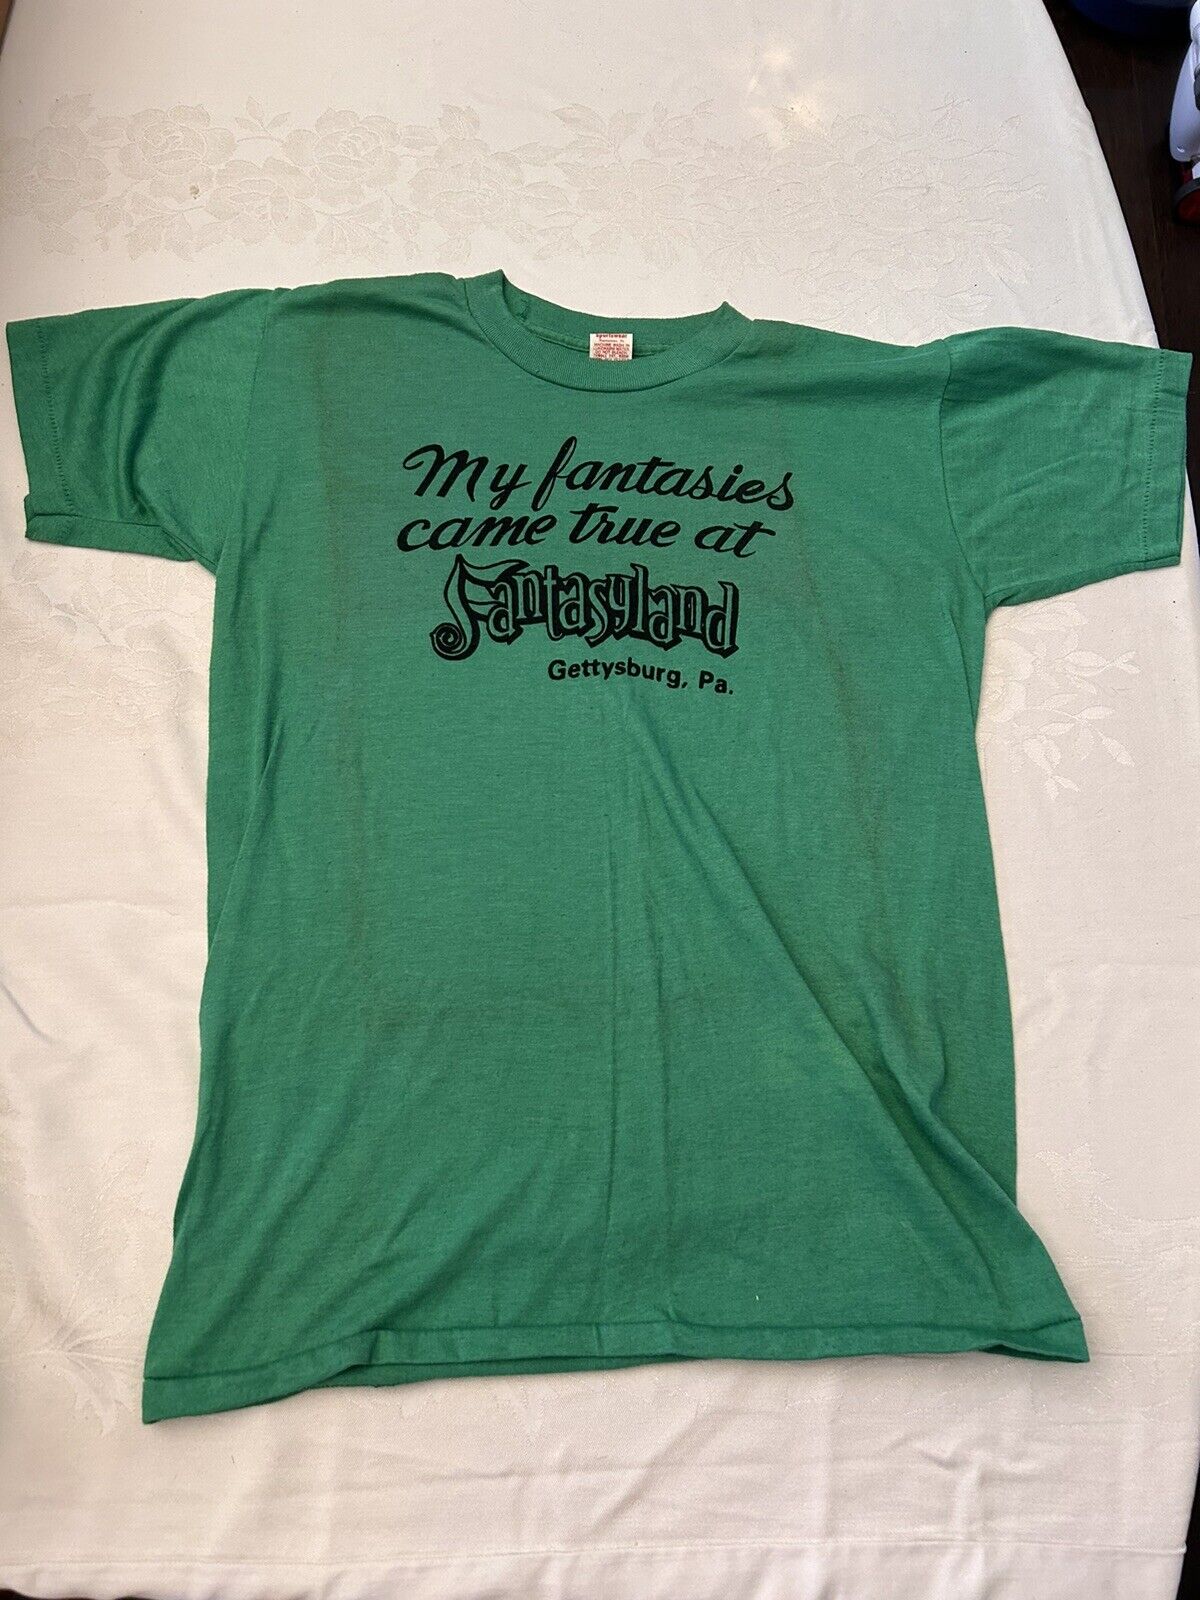 FantasyLand, Gettysburg Pa. green T-shirt, my fantasies came true 1970s vintage￼